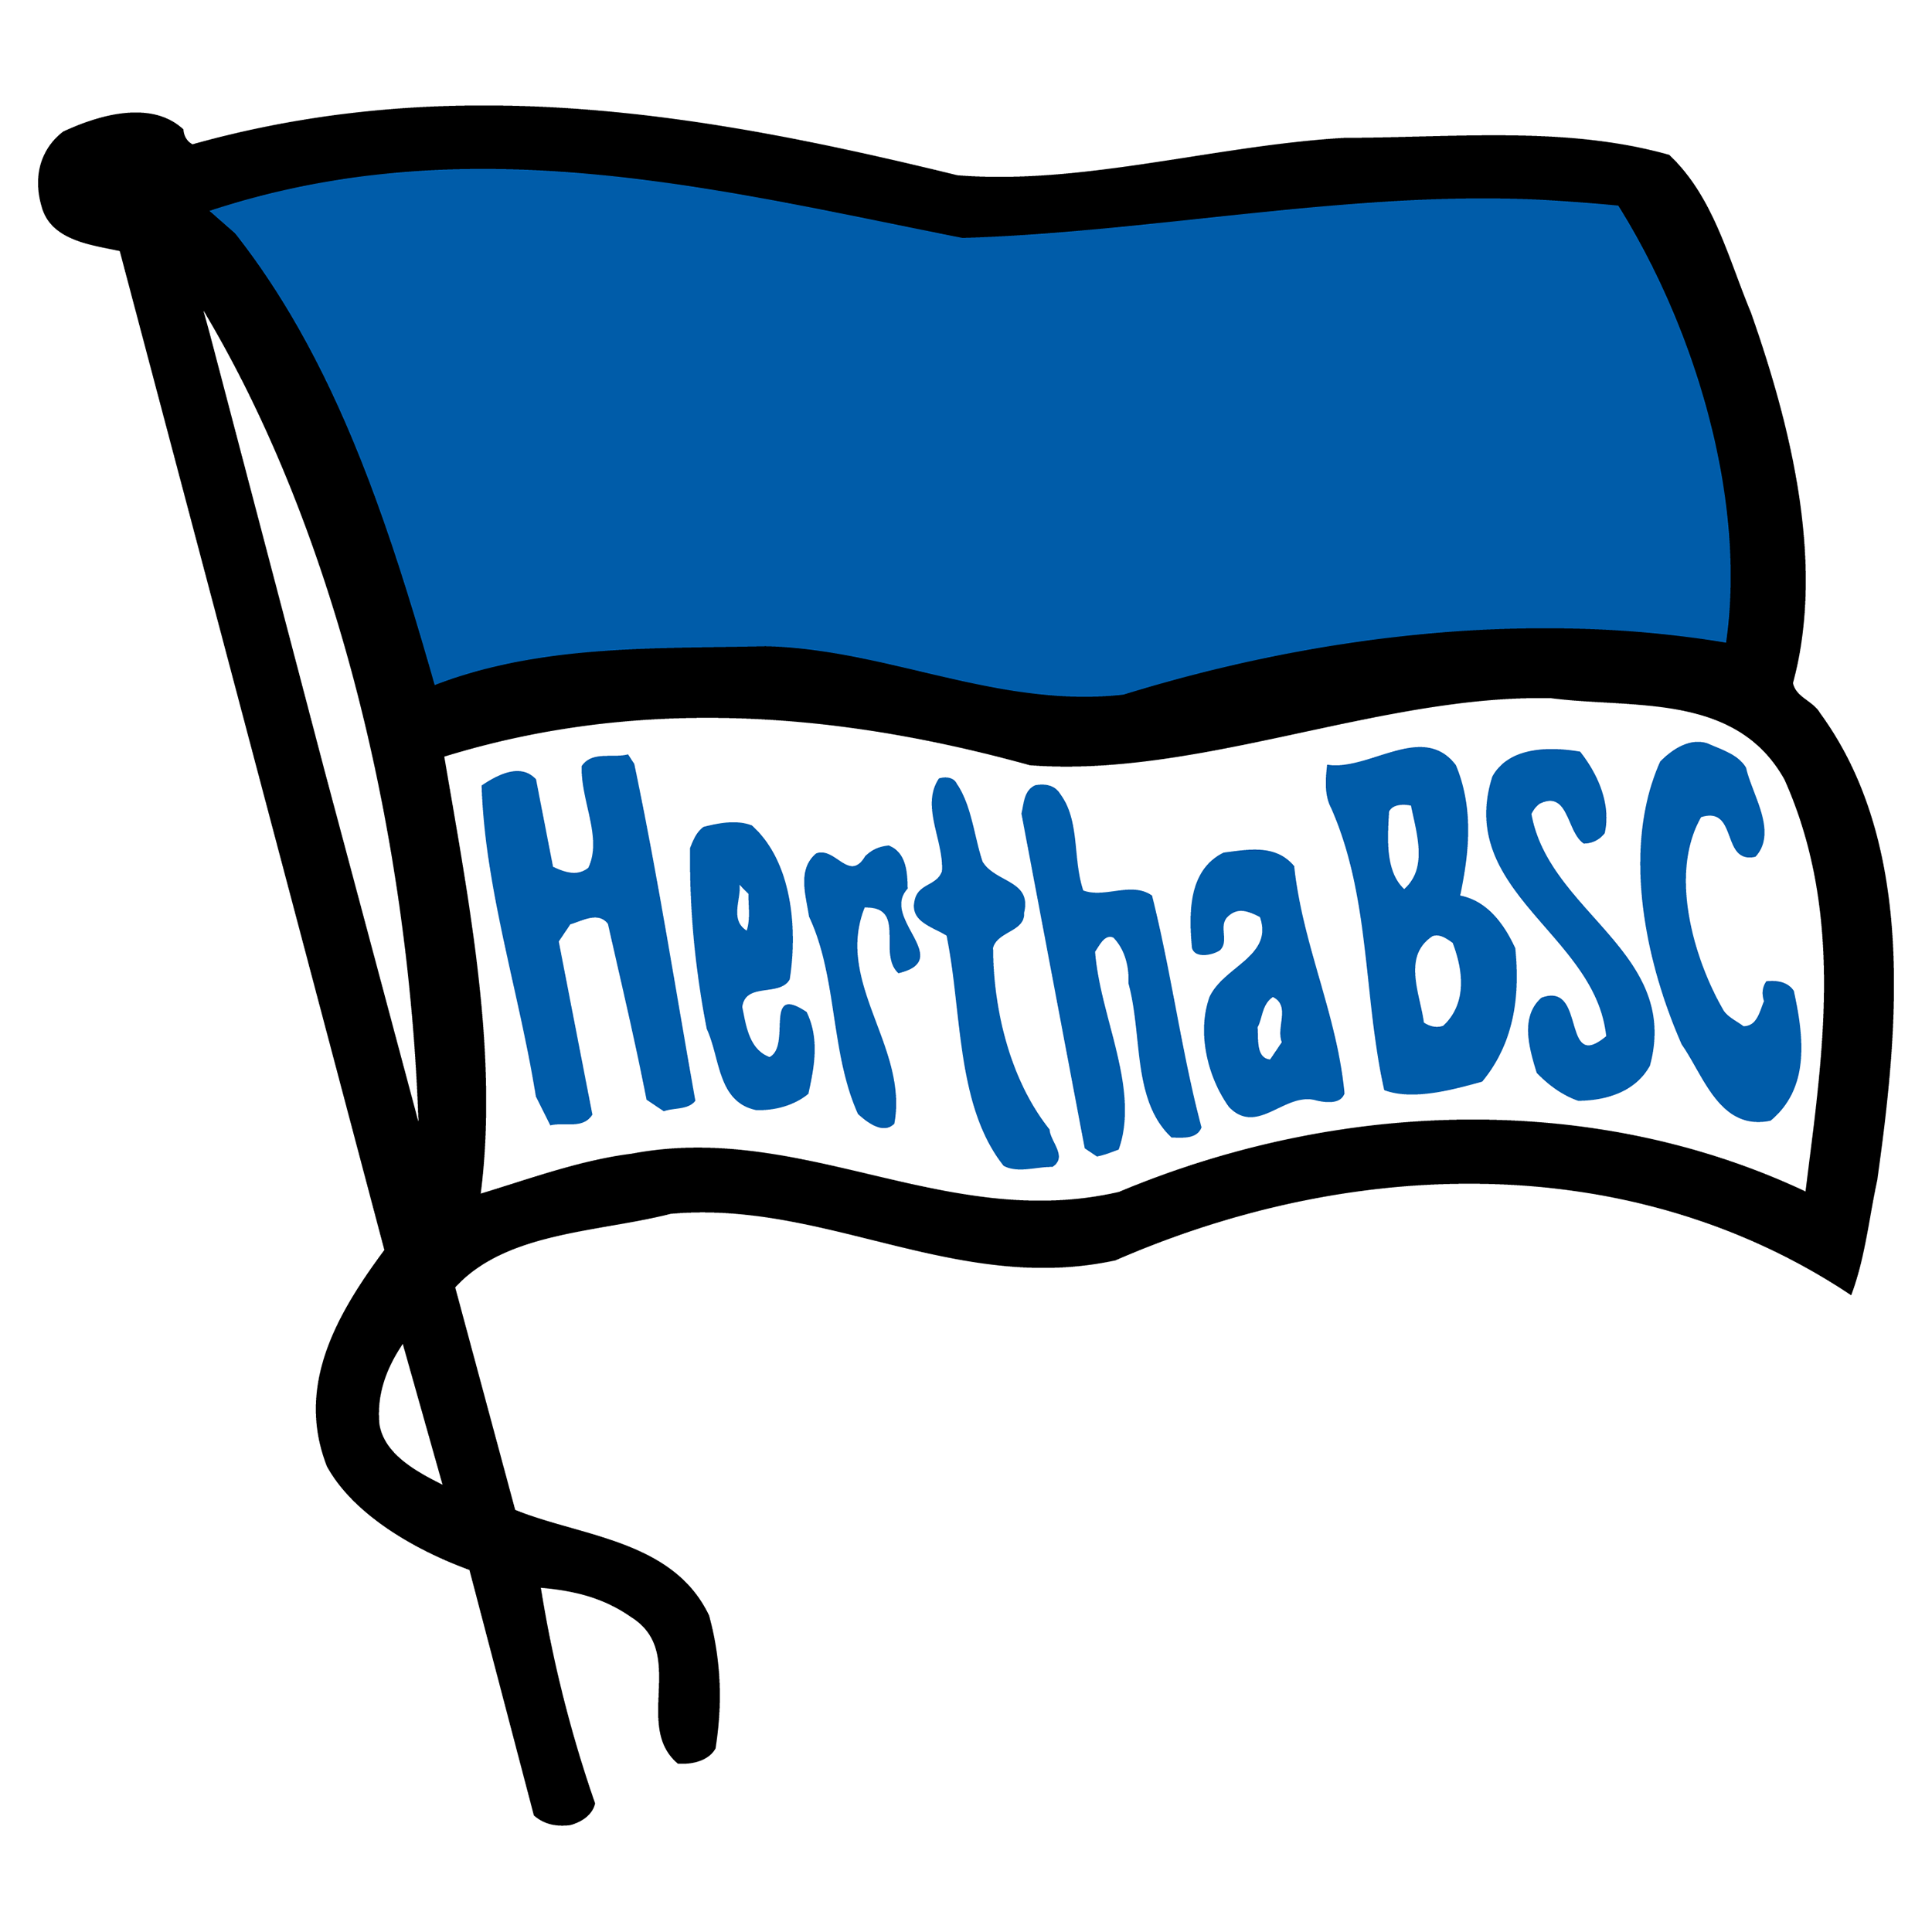 Hertha